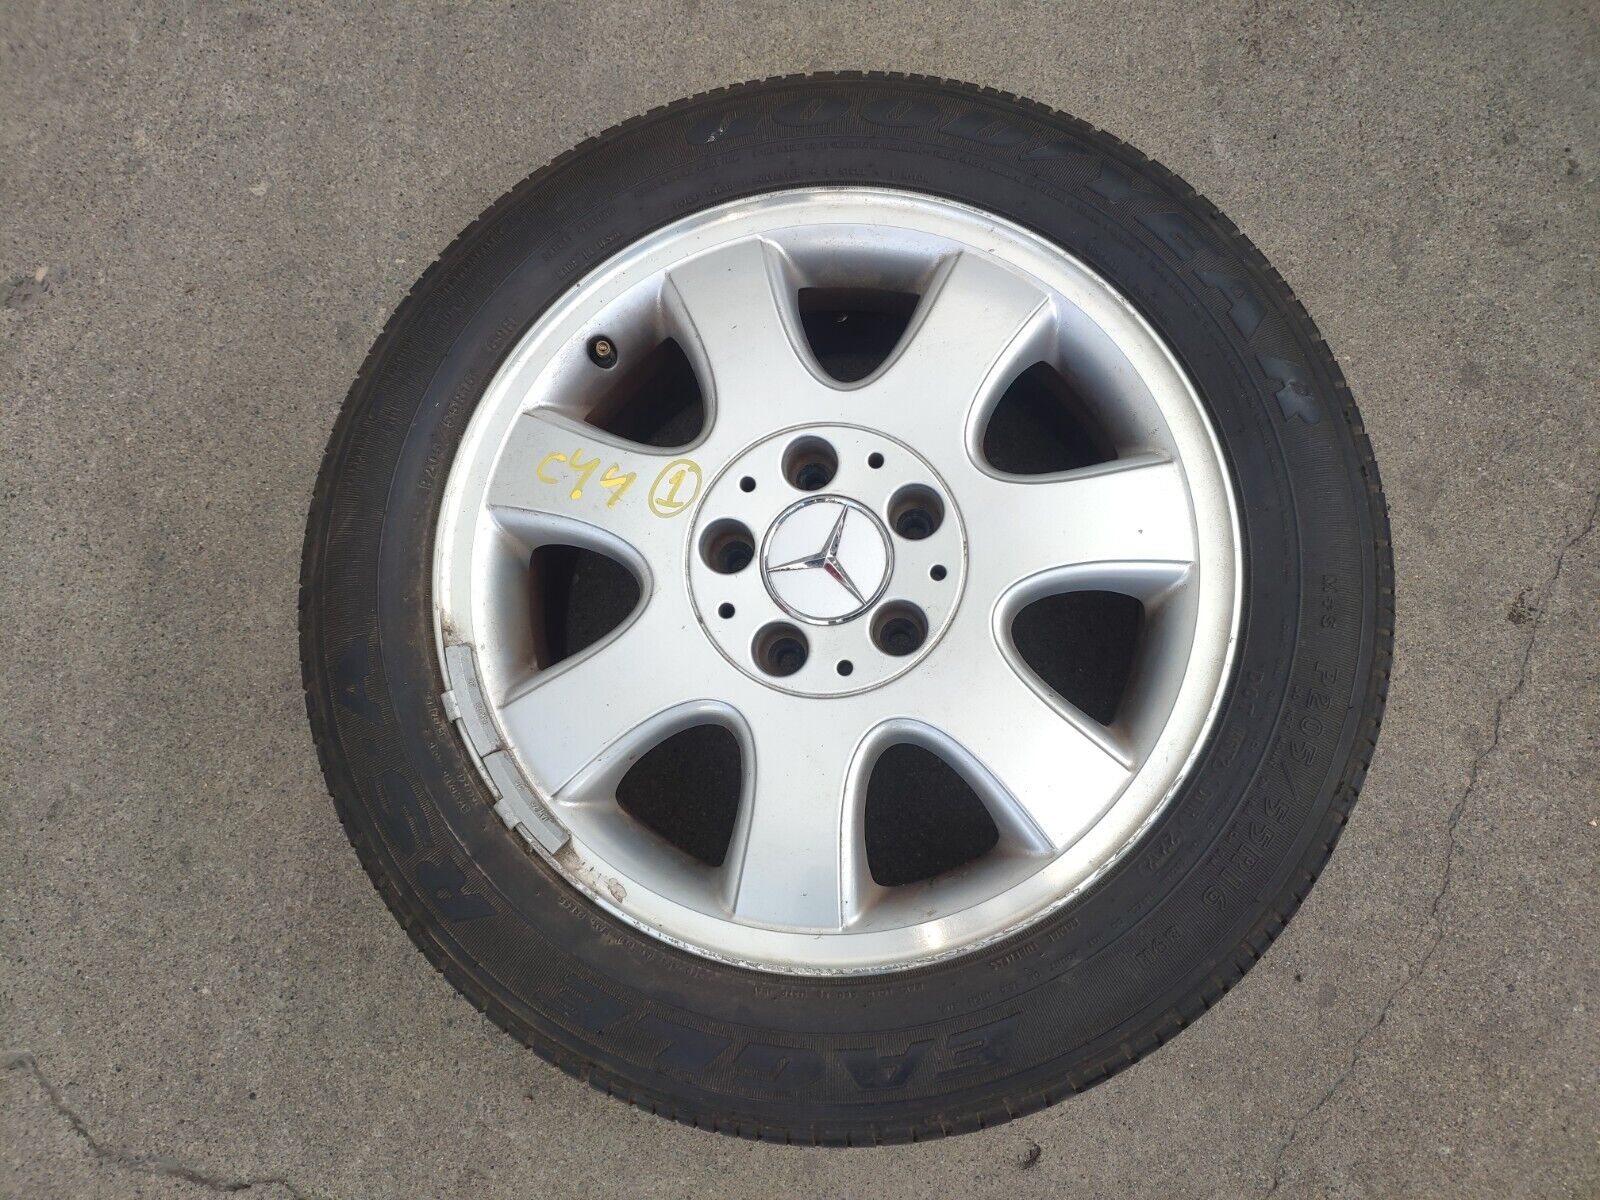 02 MERCEDES CLK320 W208 Front or Rear Left Right Wheel Tire Rim P205/55R16 C44